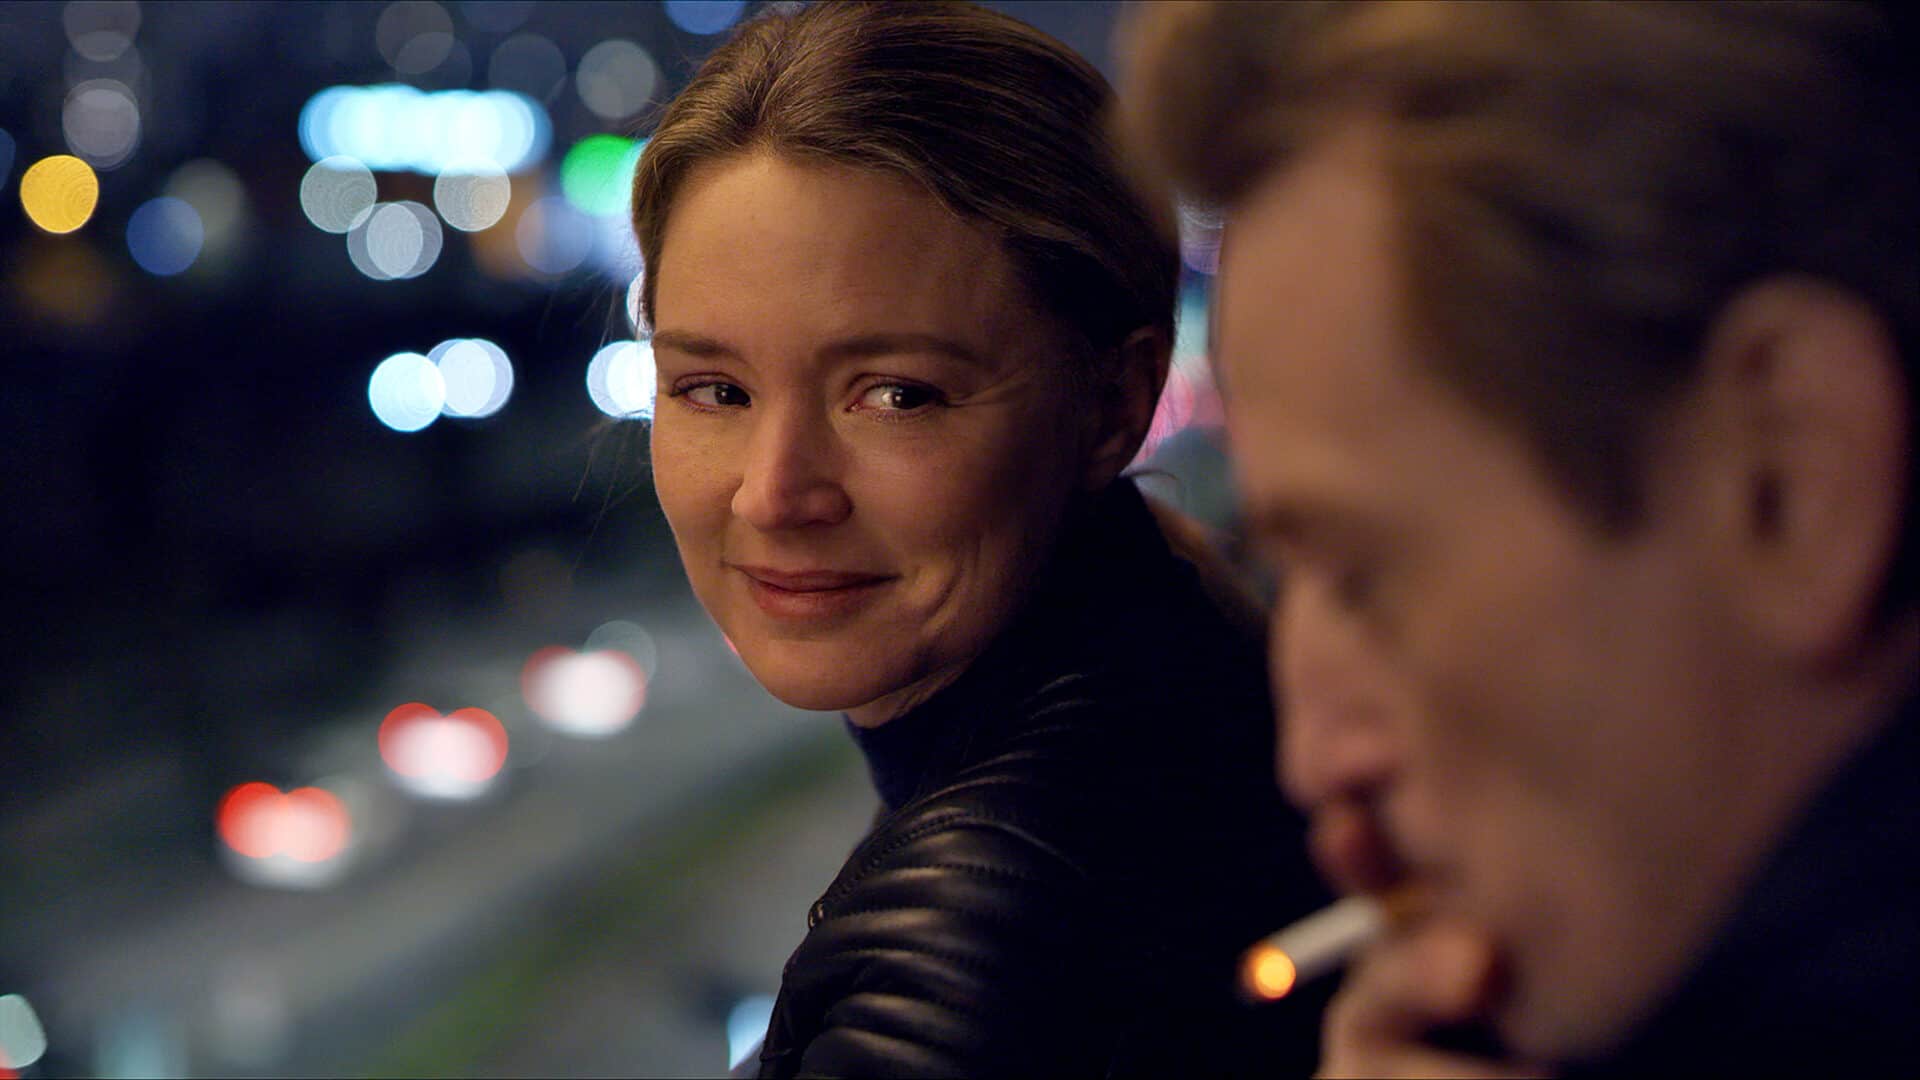 Mia (Virginie Efira) smiles at a companion on a city street at night in Revoir Paris. Press film still courtesy of Music Box Films